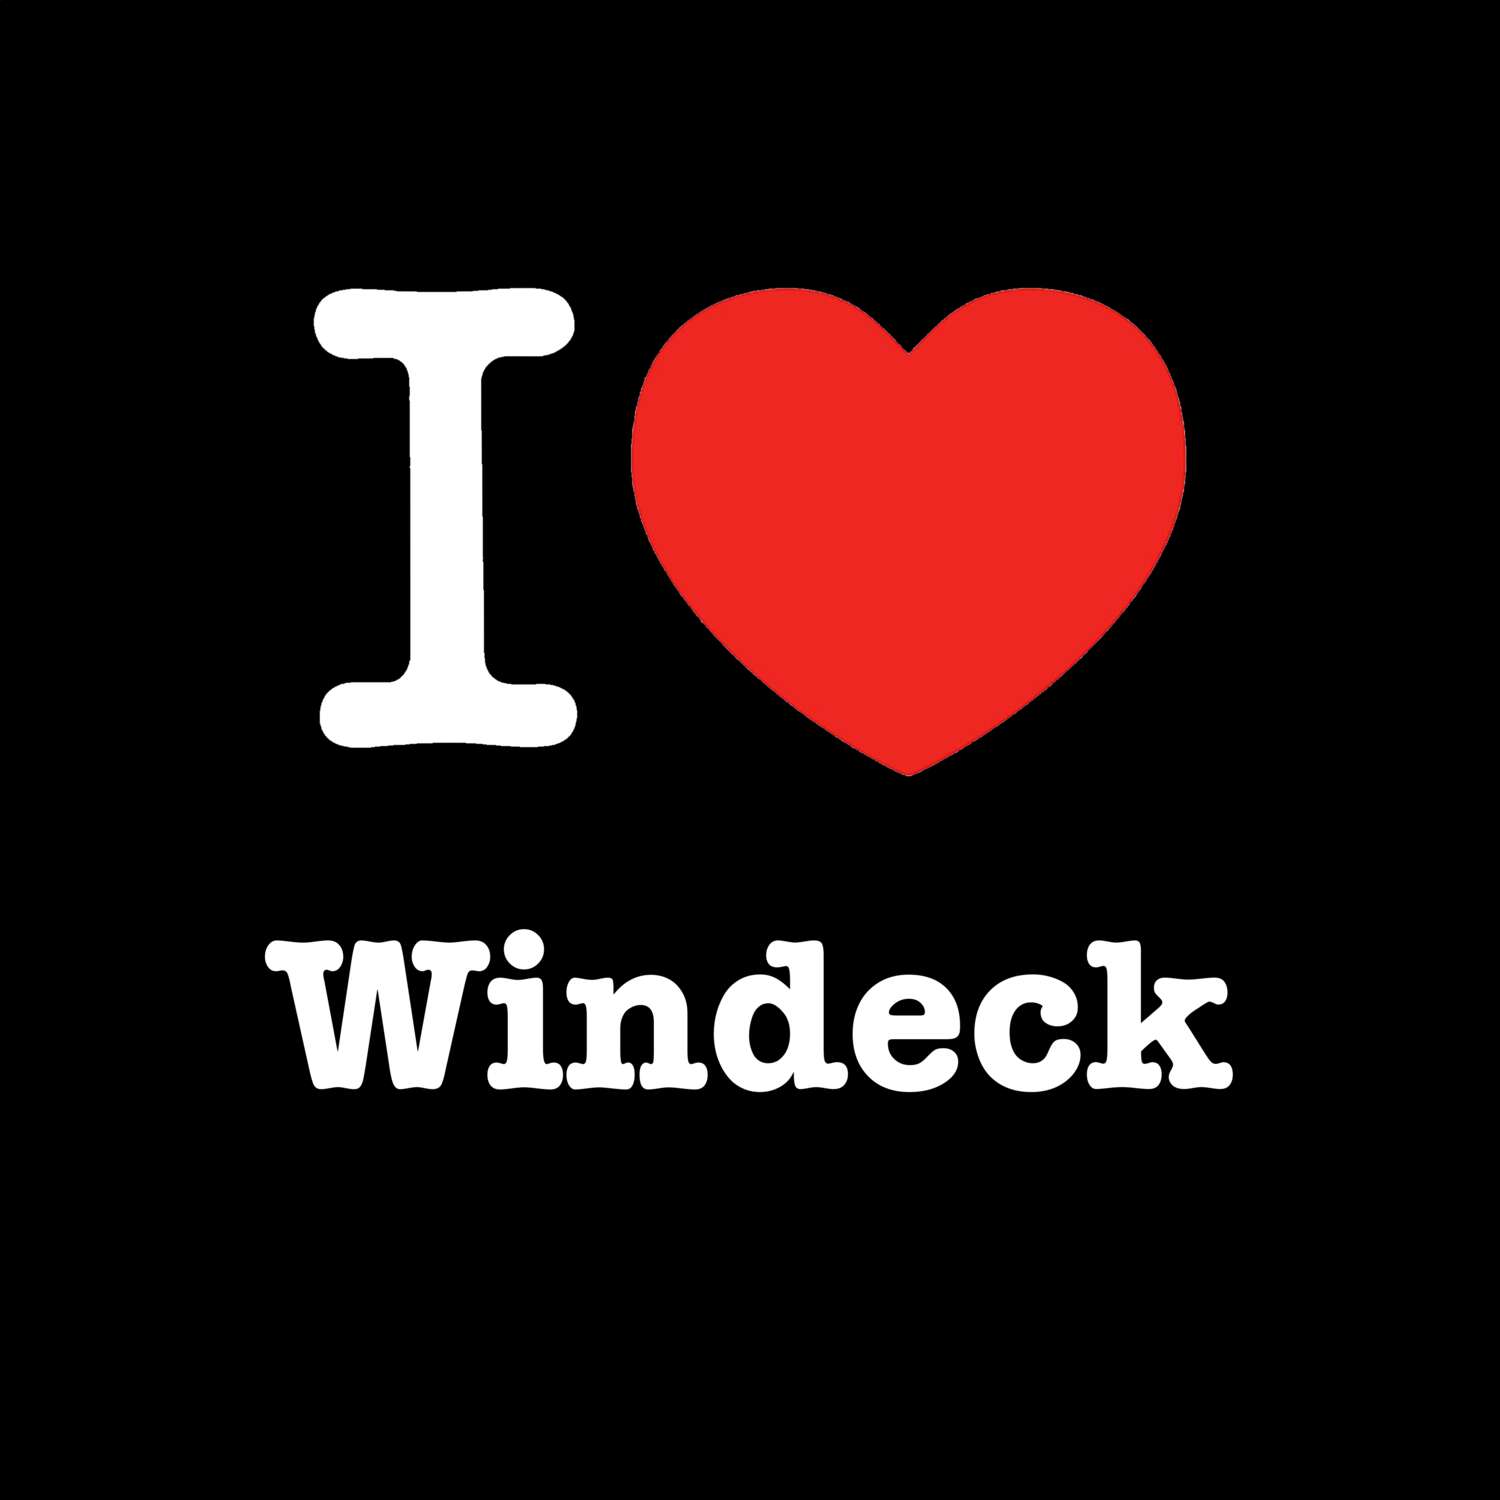 Windeck T-Shirt »I love«